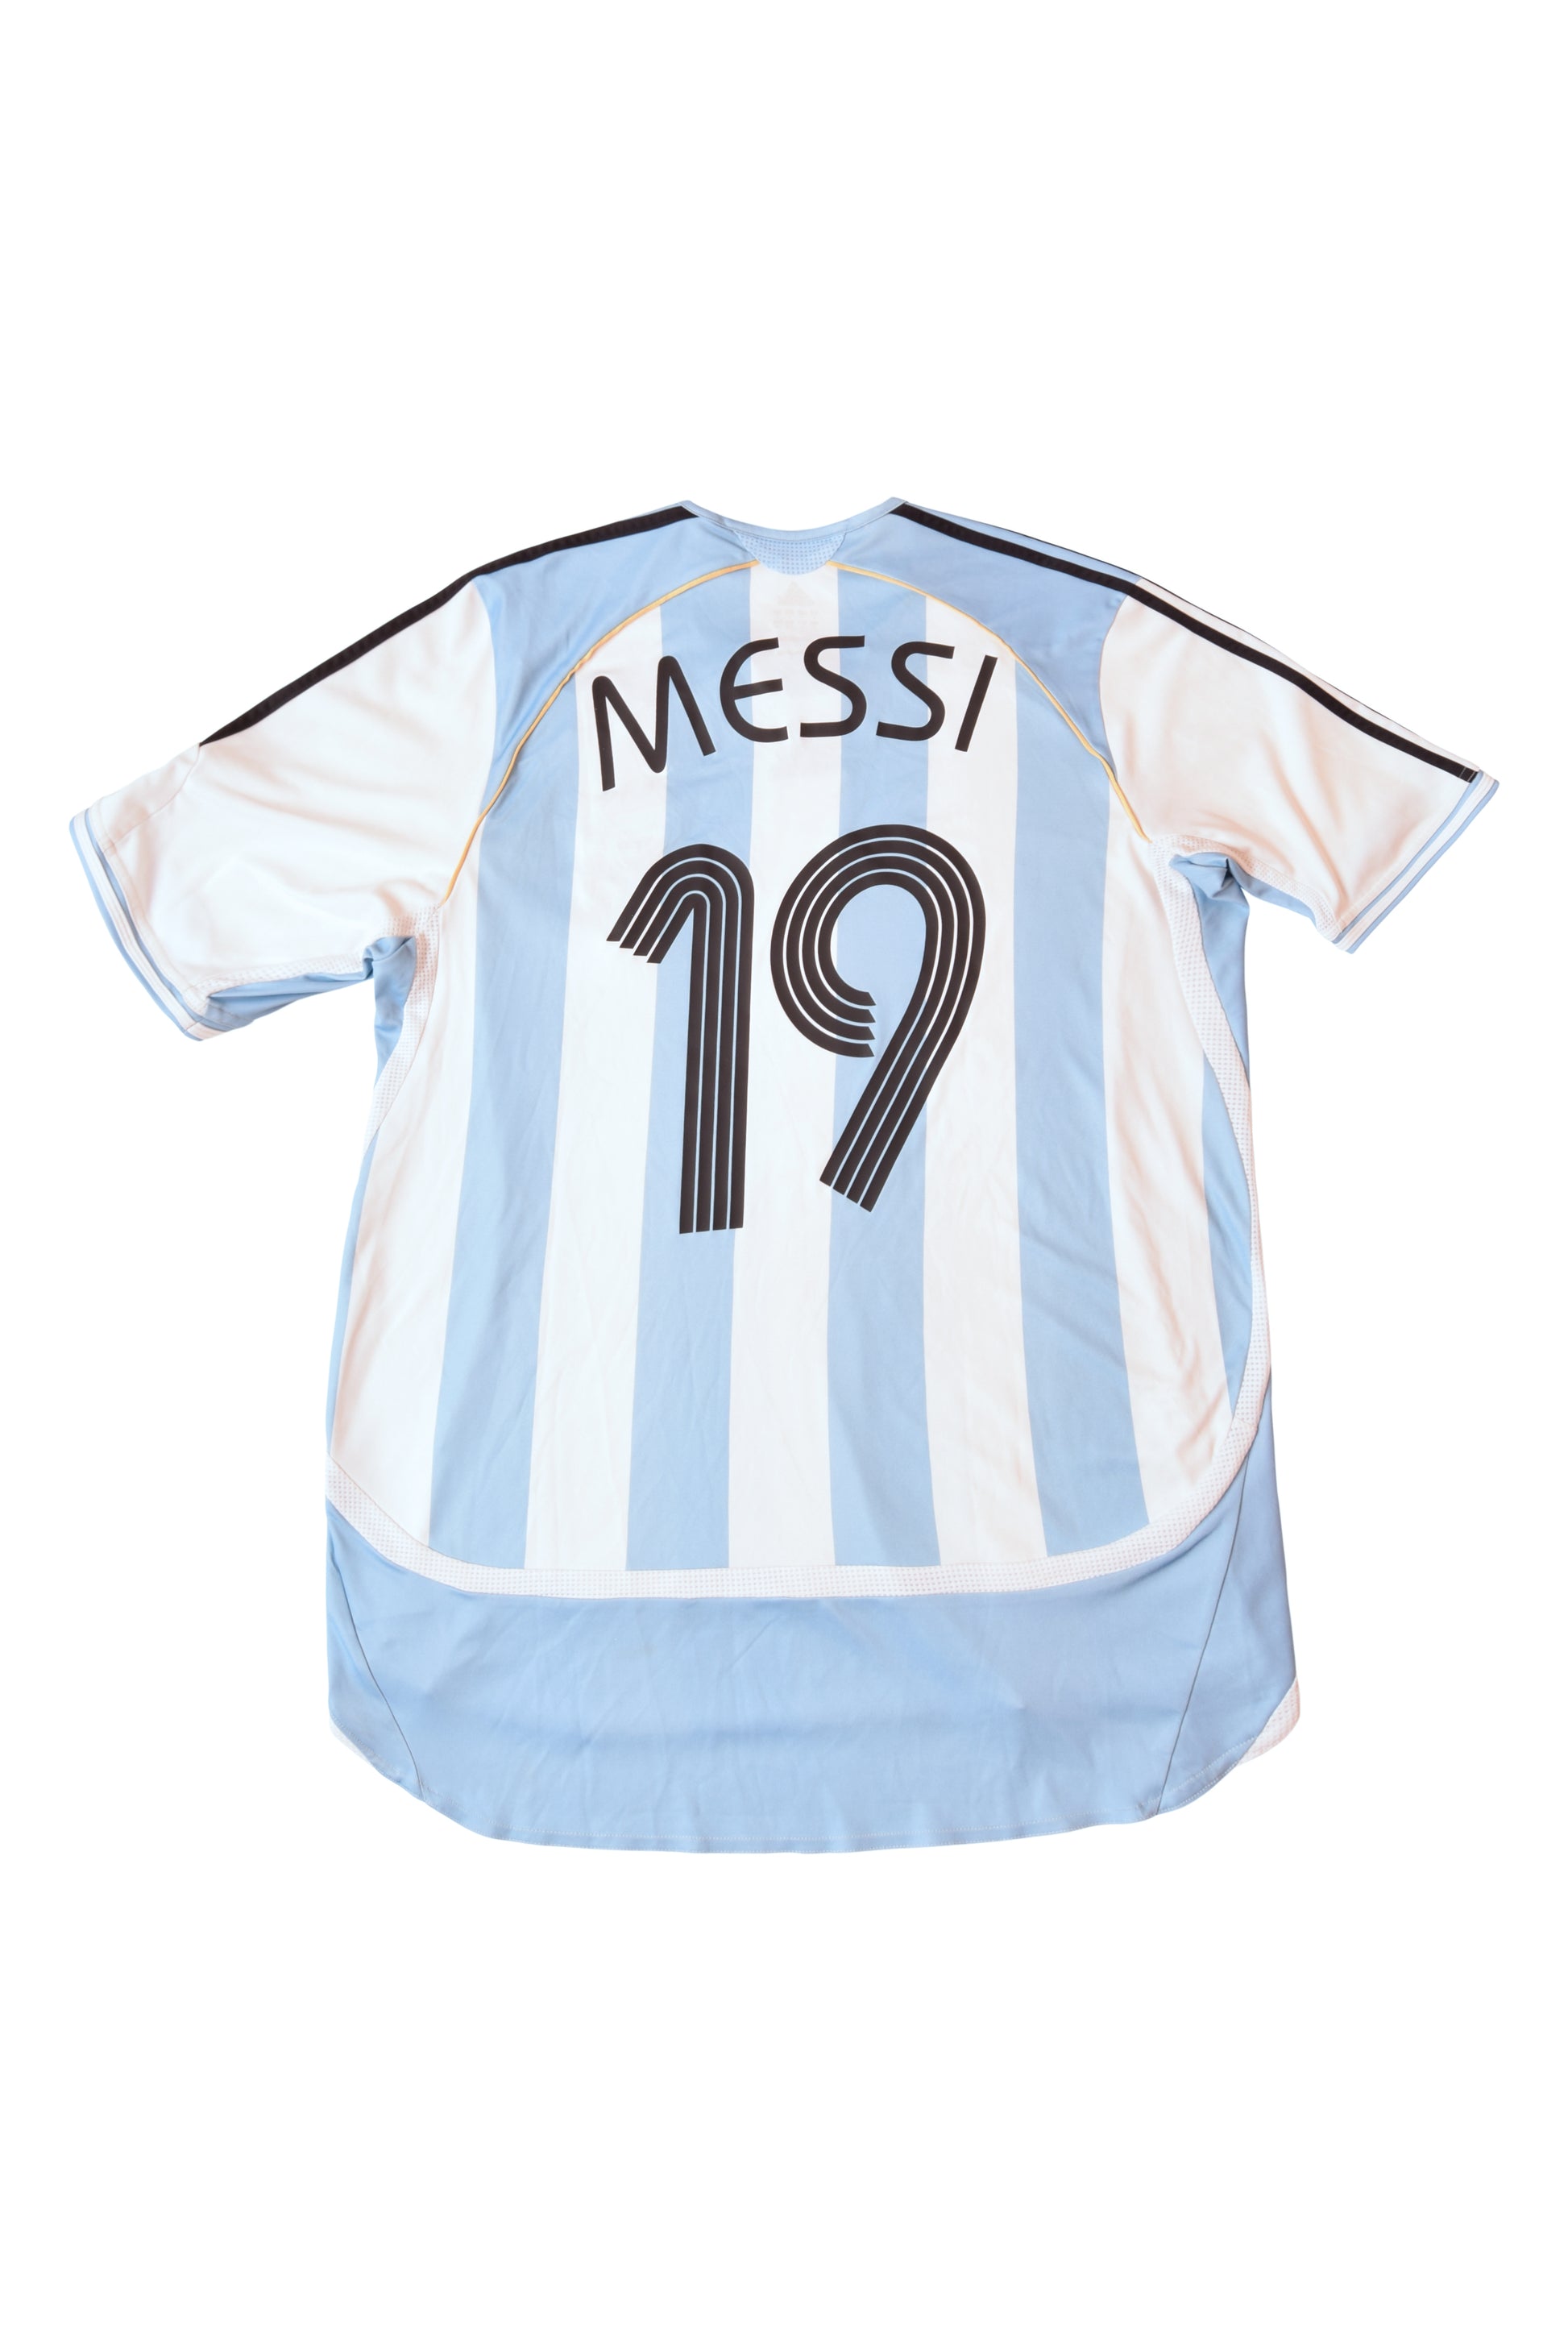 Adidas 2005-07 Argentina Home Football Shirt Messi #19 Size L 